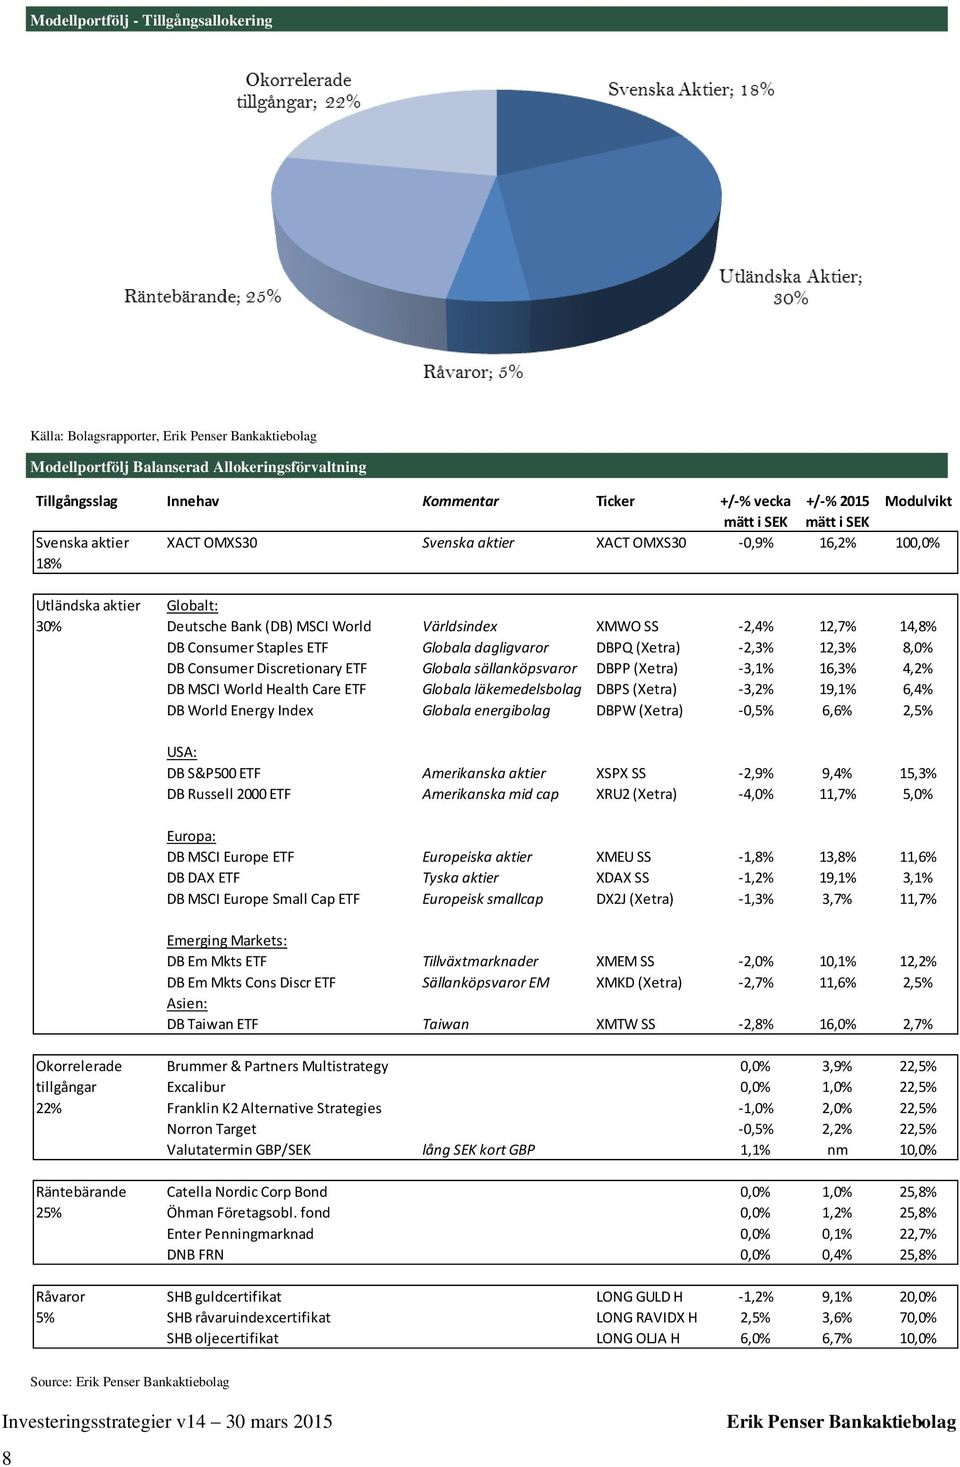 14,8% DB Consumer Staples ETF Globala dagligvaror DBPQ (Xetra) -2,3% 12,3% 8,0% DB Consumer Discretionary ETF Globala sällanköpsvaror DBPP (Xetra) -3,1% 16,3% 4,2% DB MSCI World Health Care ETF